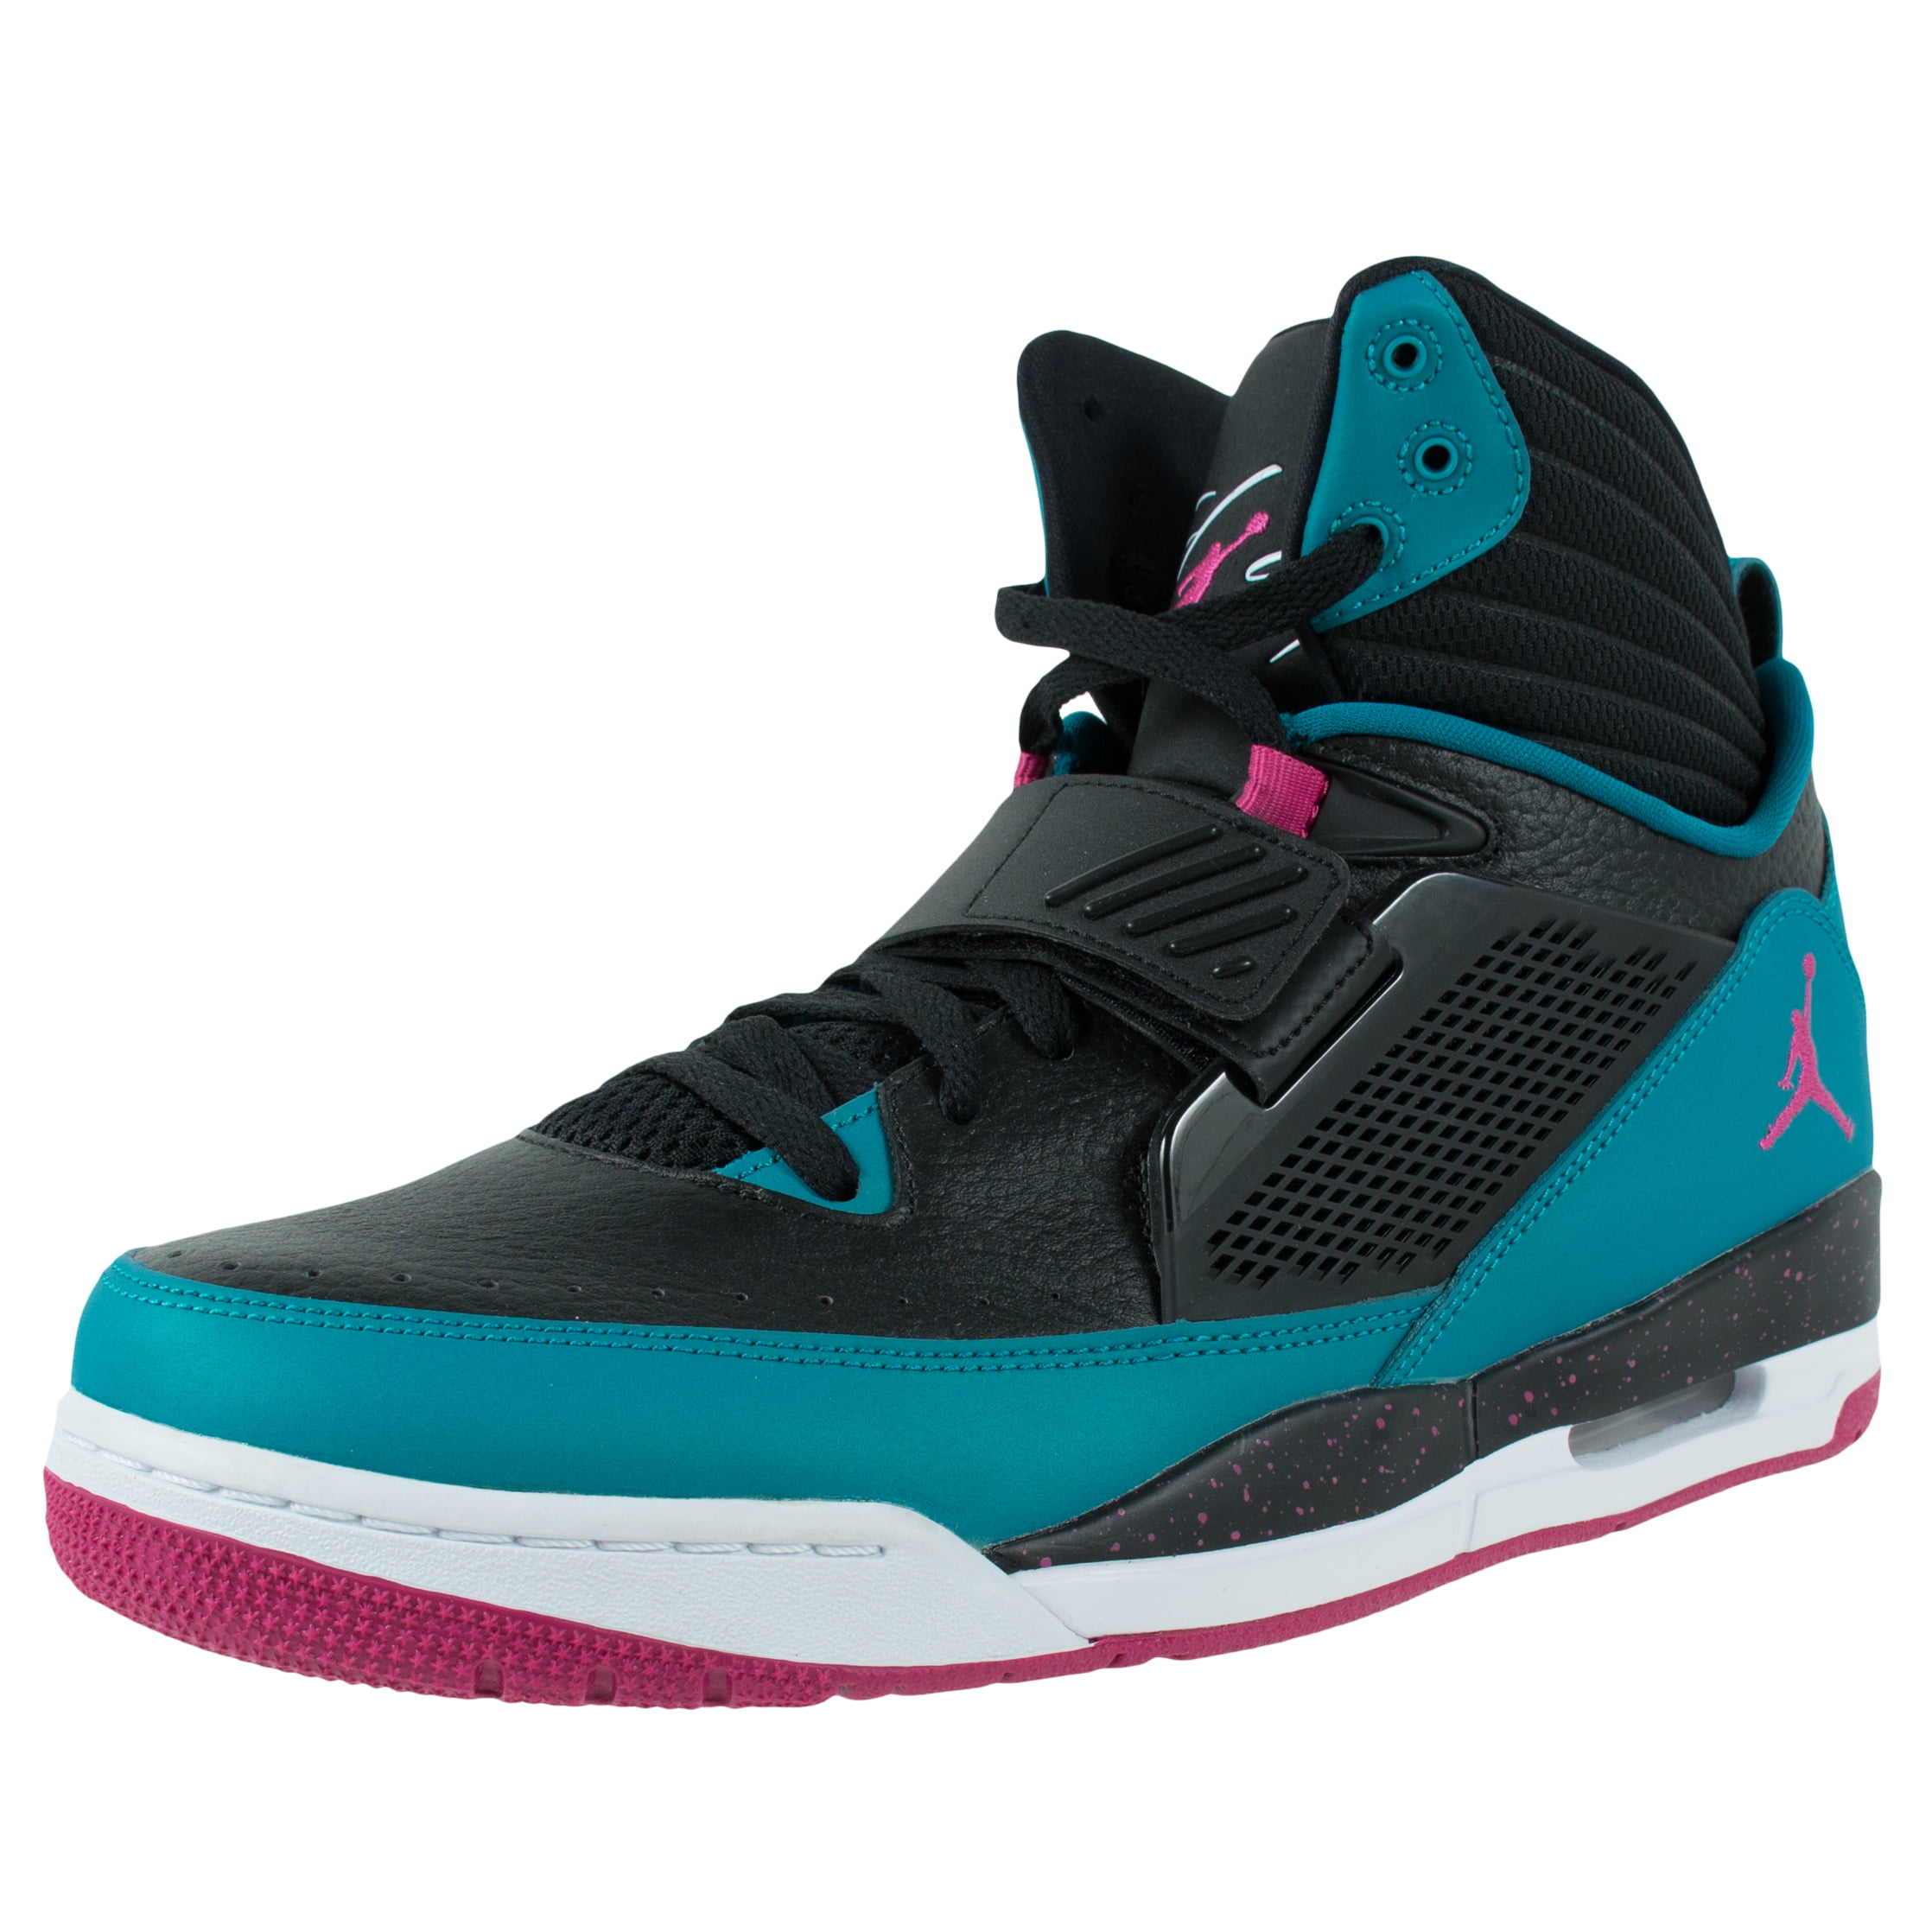 Nike Air Jordan Flight 97 Black/Fusion Pink-Tropical Teal-Electric Orange 654265-019 Men's Size 11 -